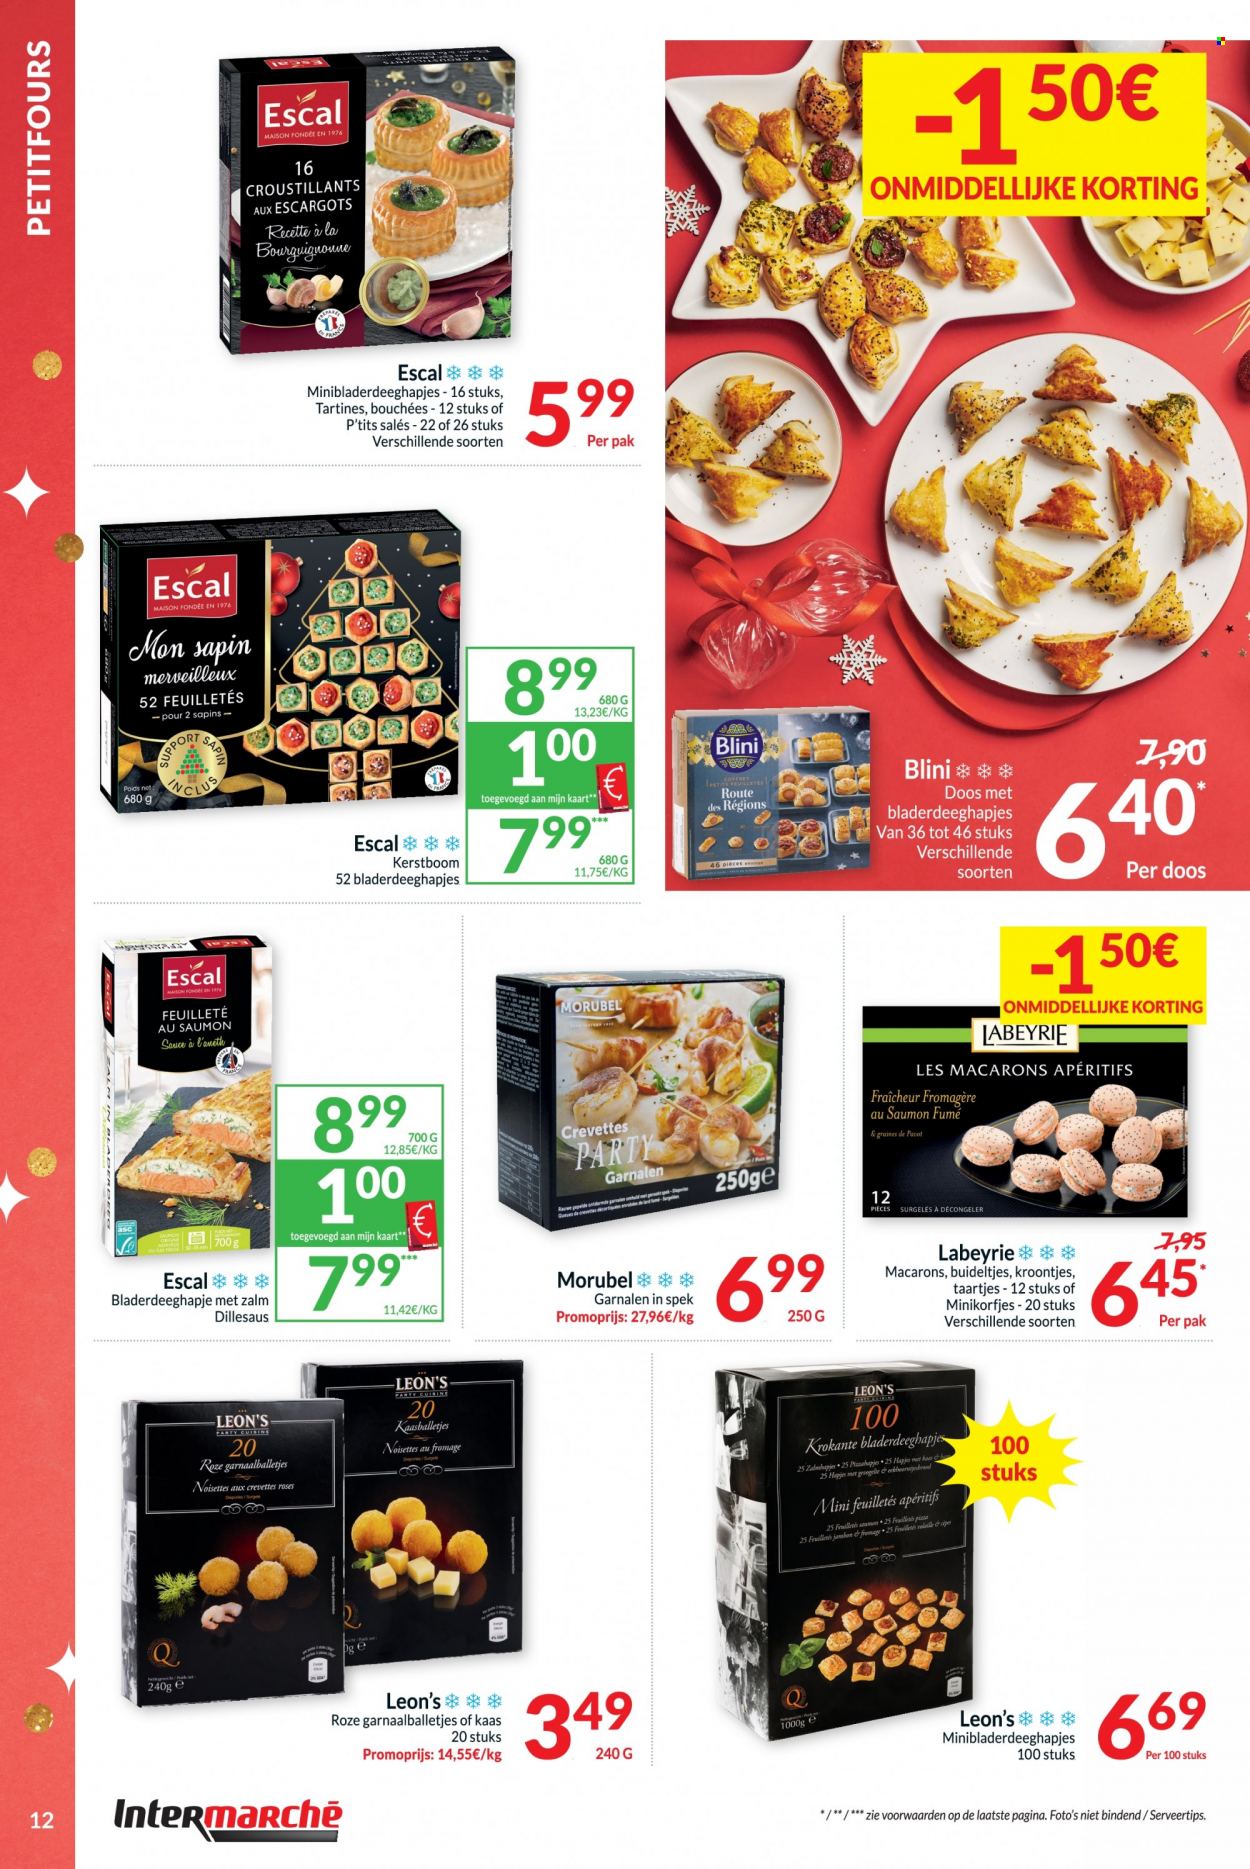 thumbnail - Intermarché-aanbieding - 22/11/2022 - 31/12/2022 -  producten in de aanbieding - eekhoorntjesbrood, Blini’s, petitfours, macarons, garnalen, pizza, kaas, lard, Fa. Pagina 12.